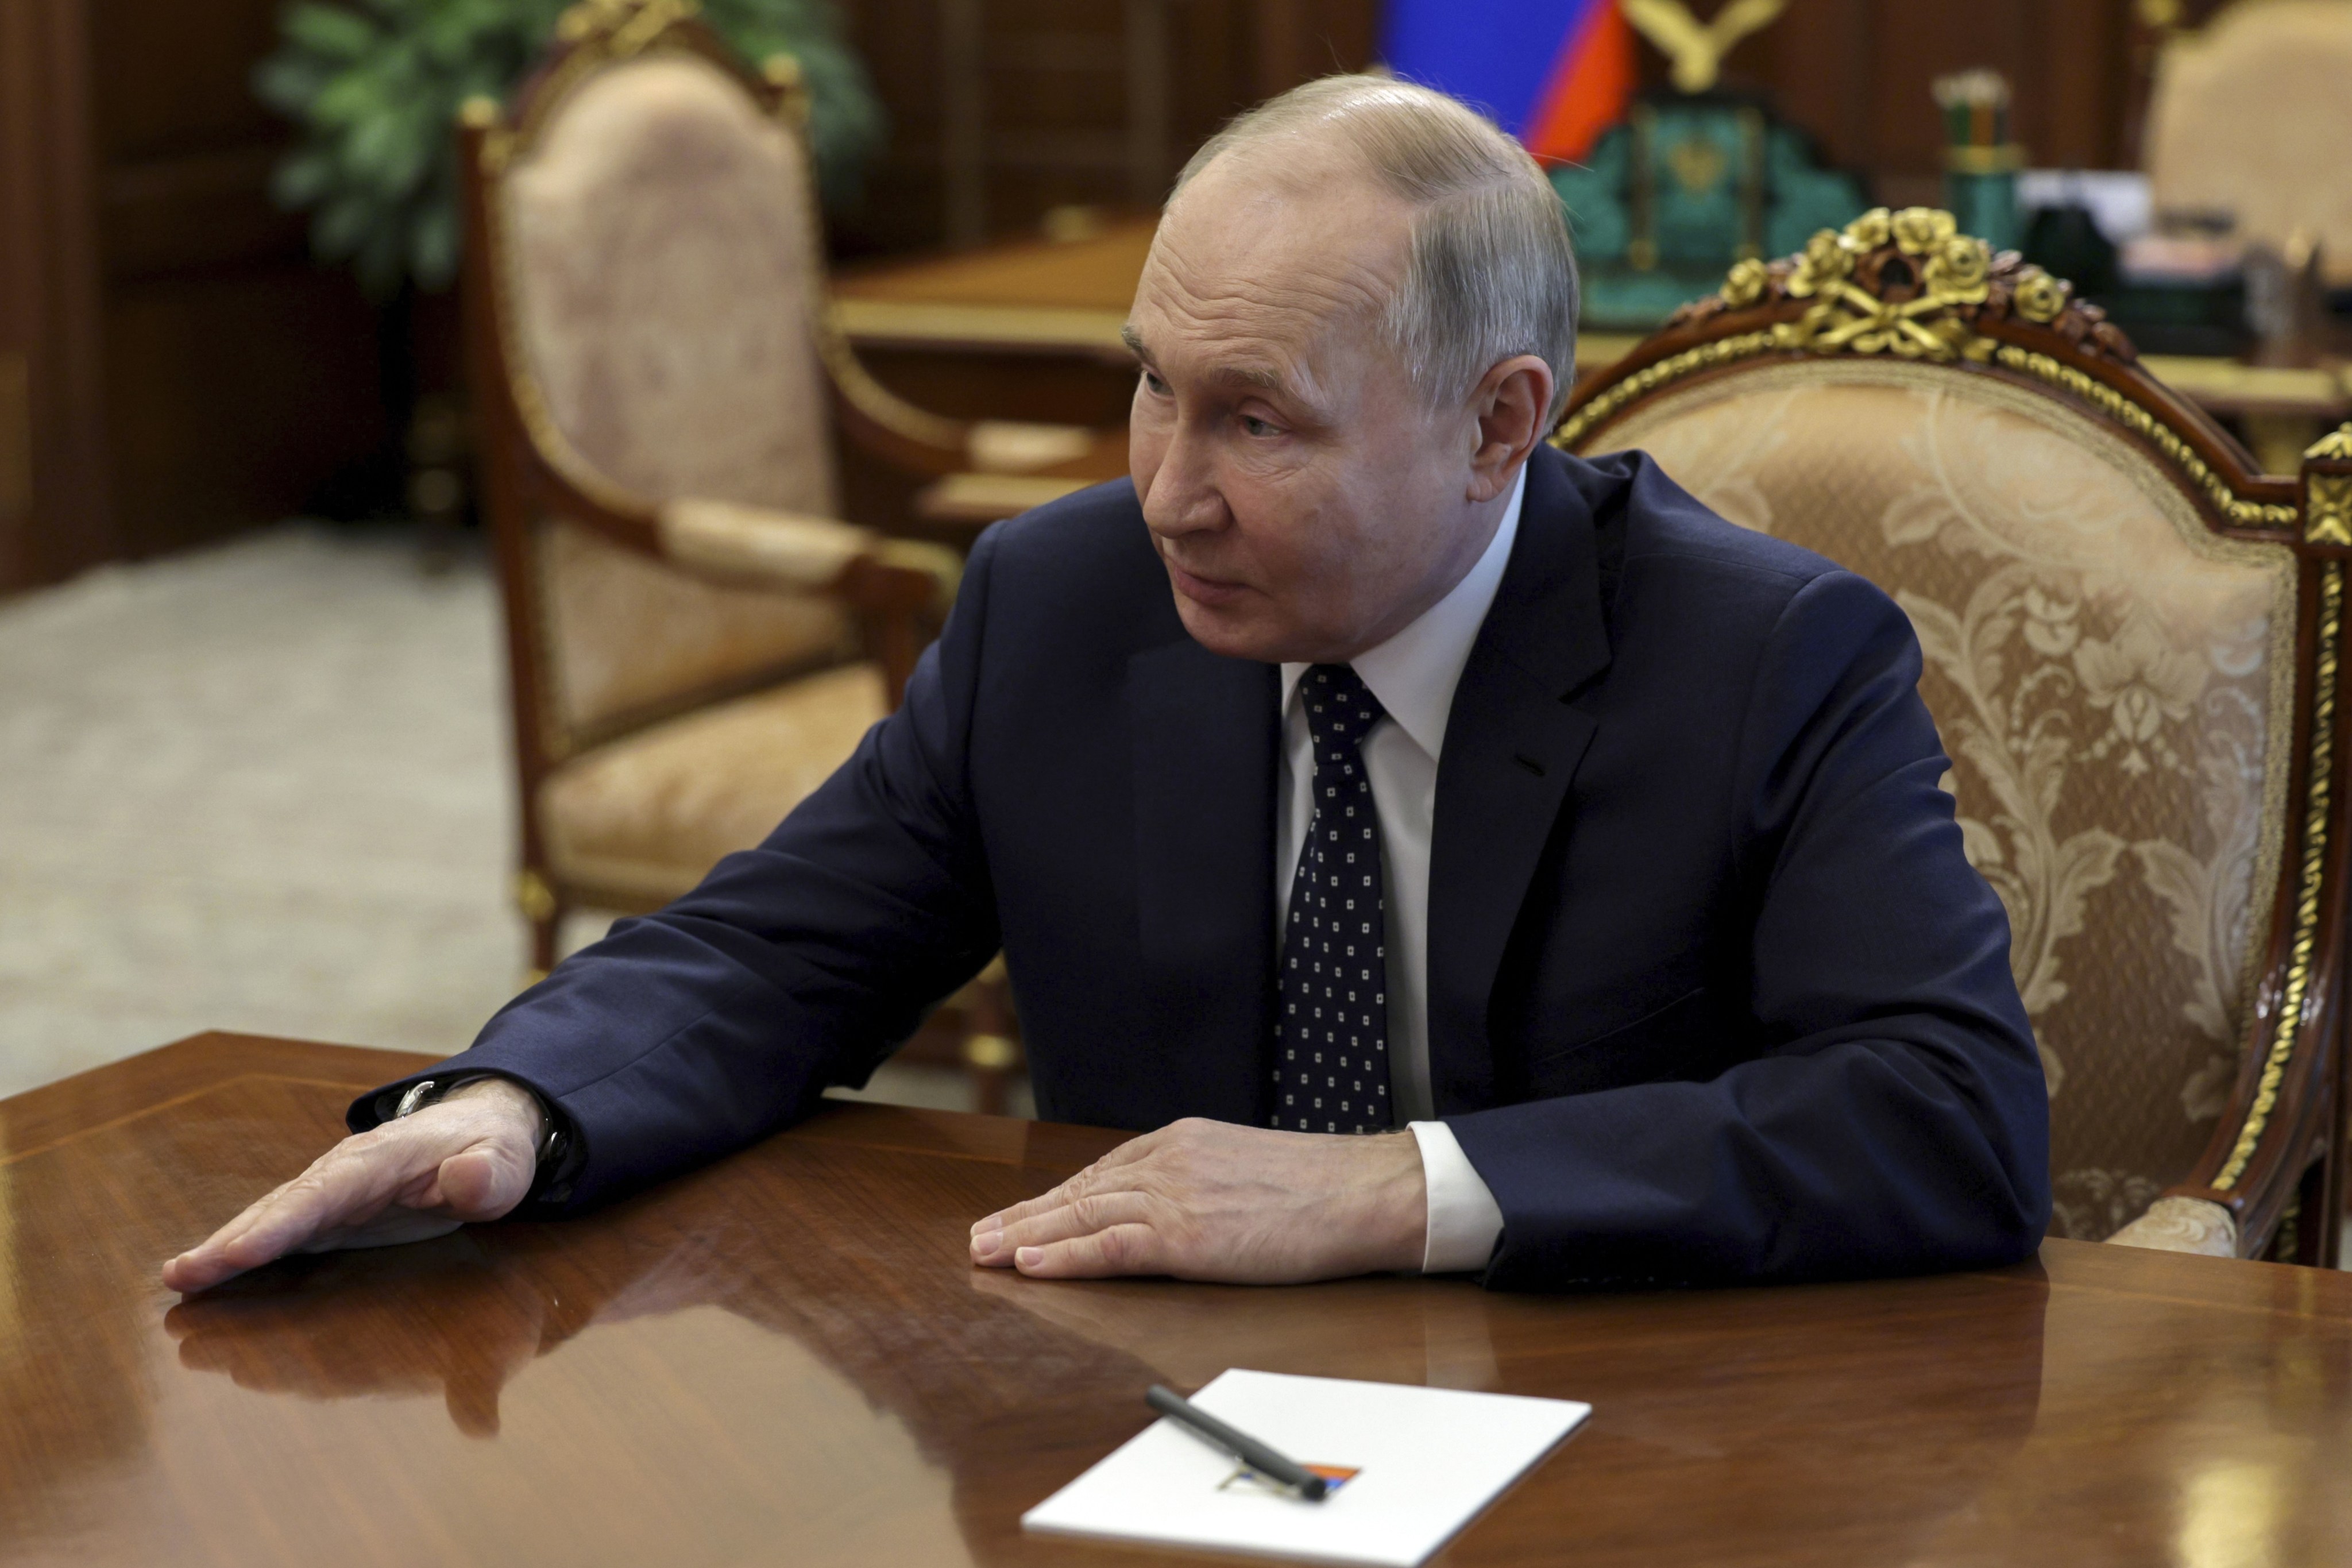 Russian President Vladimir Putin at the Kremlin in Moscow, Russia on Saturday. Photo: Sputnik, Kremlin Pool Photo via AP